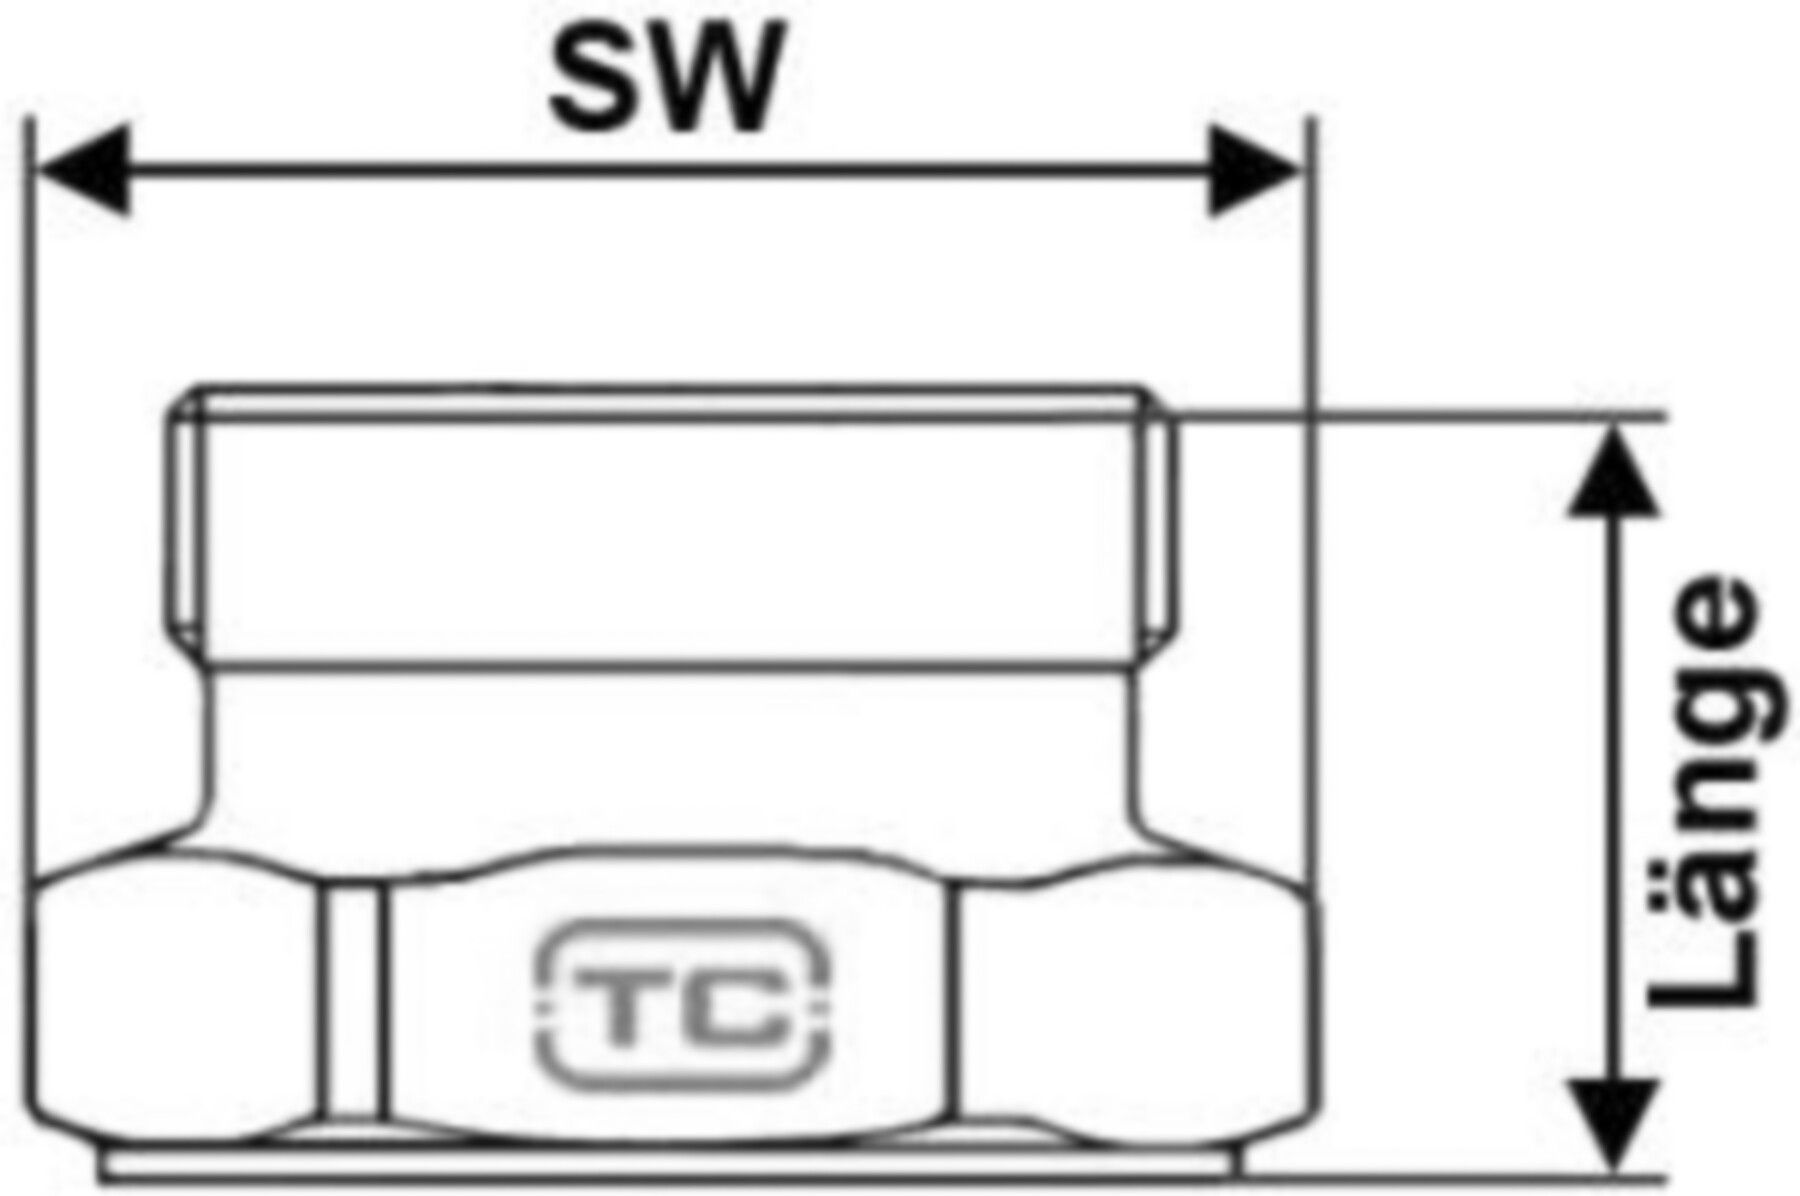 Schwerkraftumlaufsperre Typ TS 23 S+S DN 32 11/4" L= 45 mm D= R 2" SW 65 - Ticom Therm-Stop